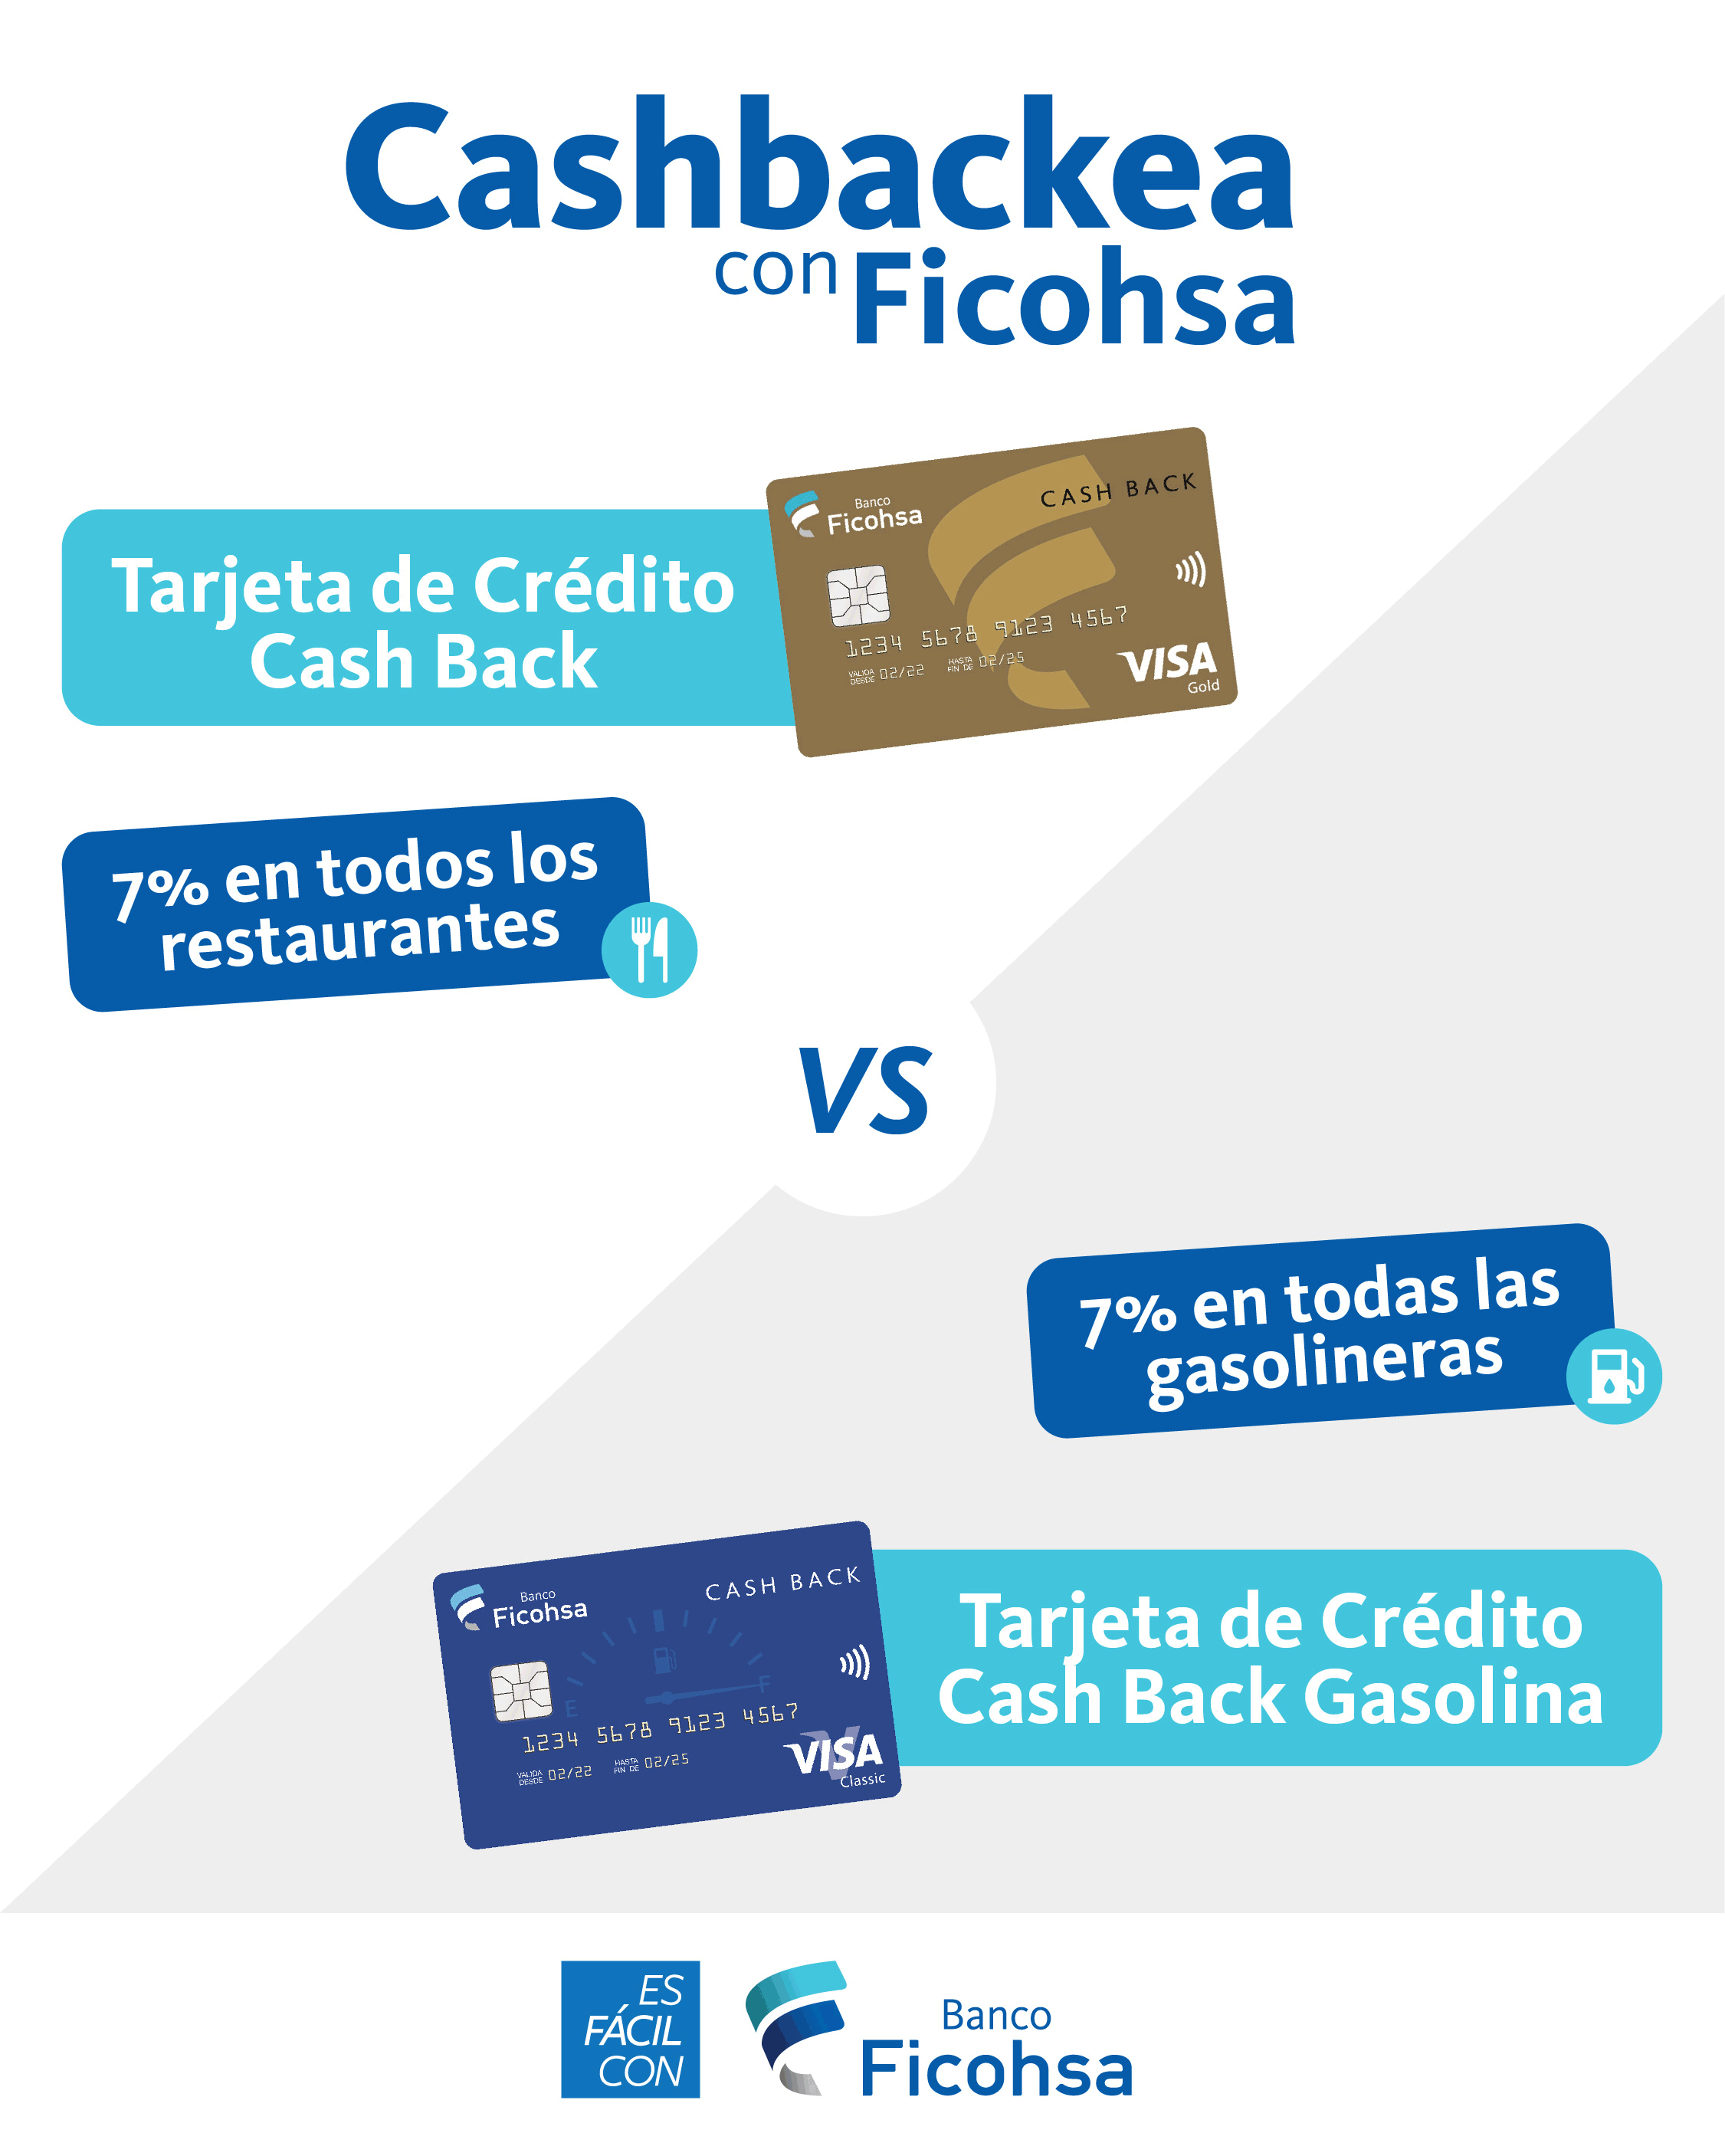 cashbackea-con-ficohsa-cashback-vs-cashback-gasolina-ficohsa